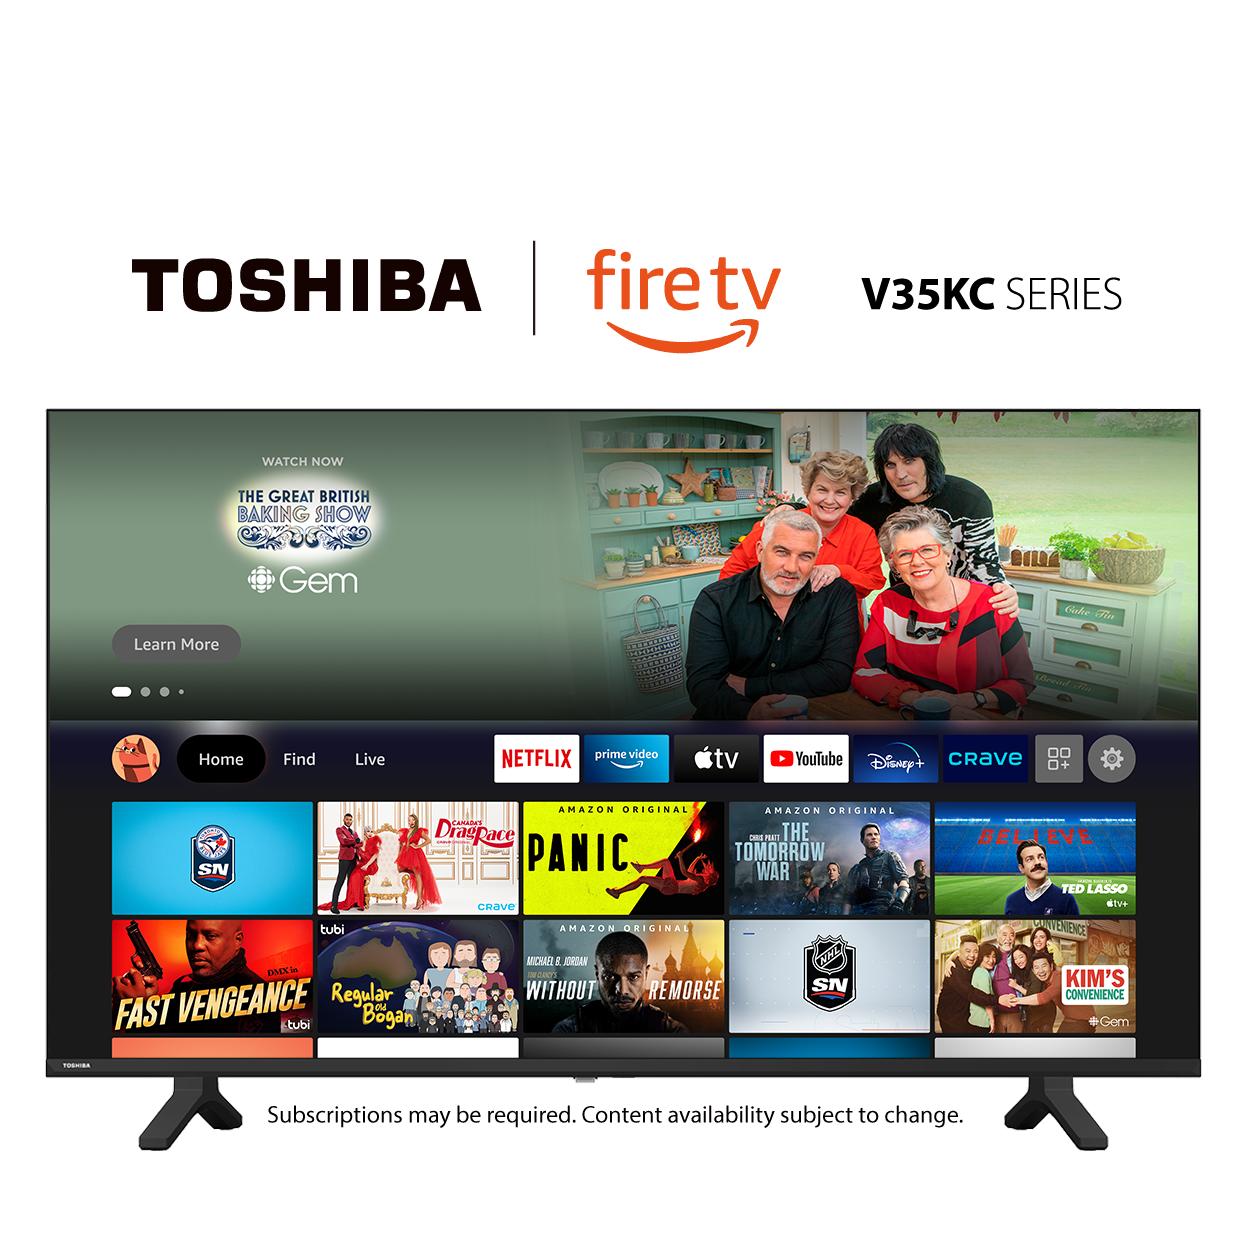 Smart TV Toshiba V35 Series 32V35KU LCD Fire TV HD 32 120V